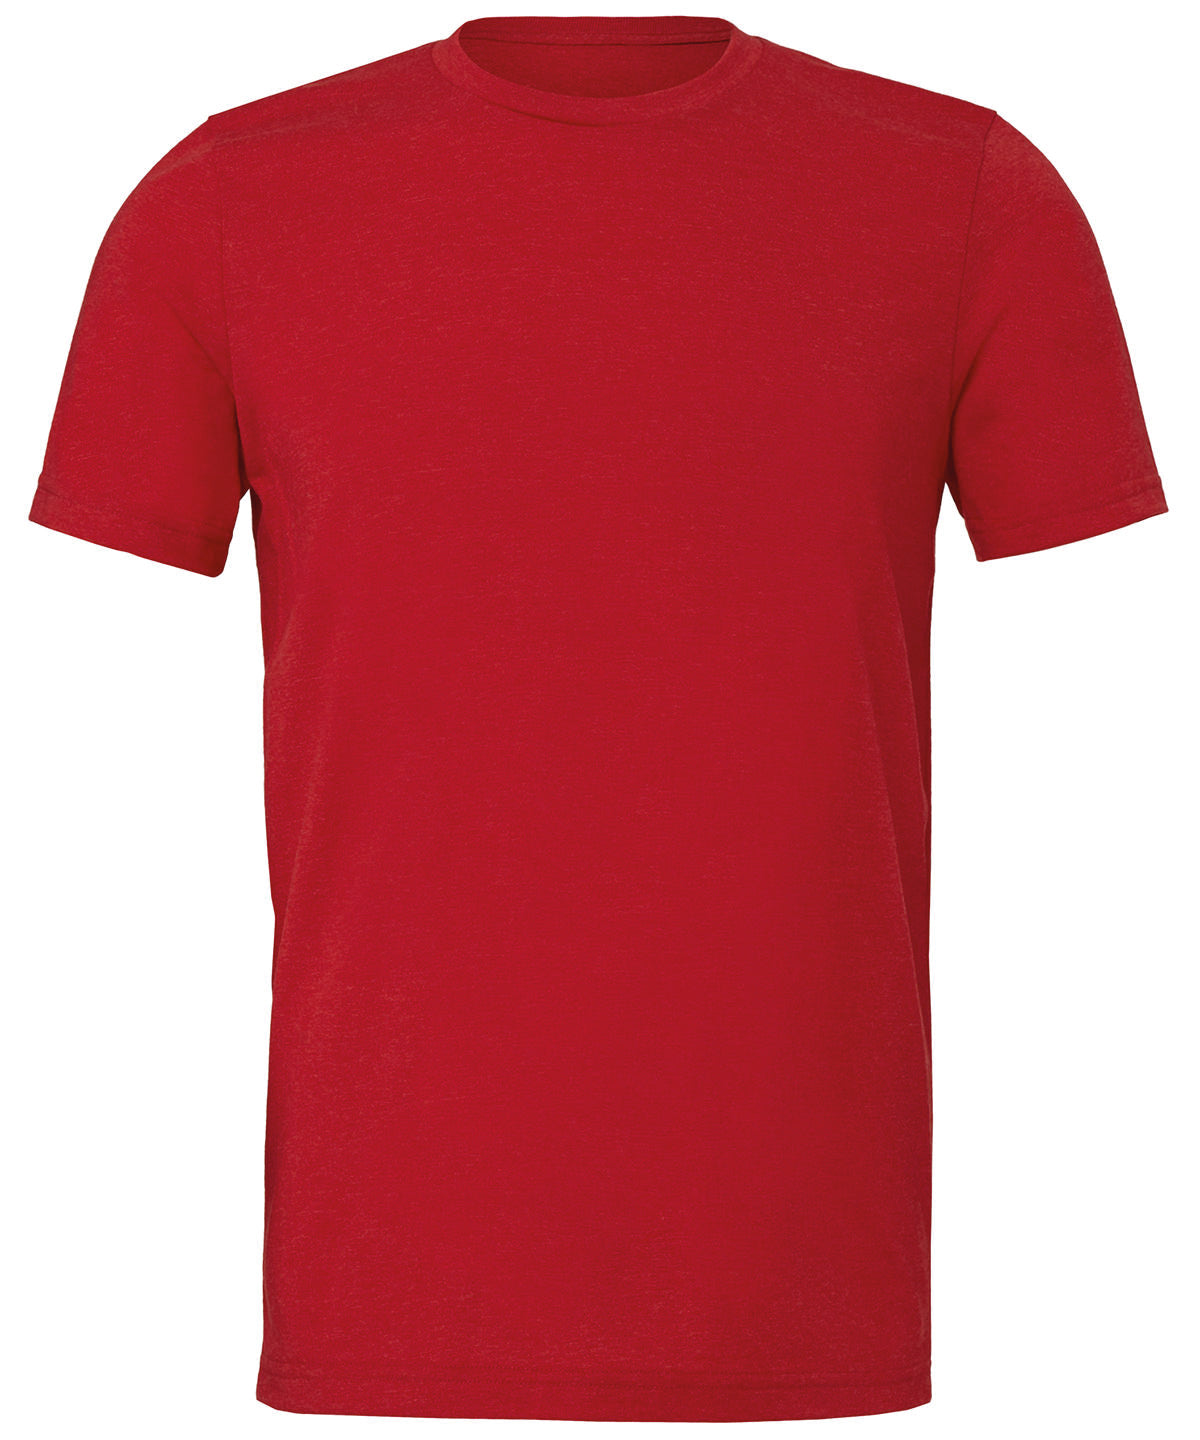 Bella Canvas Unisex Heather Cvc Short Sleeve T-Shirt - Heather Red